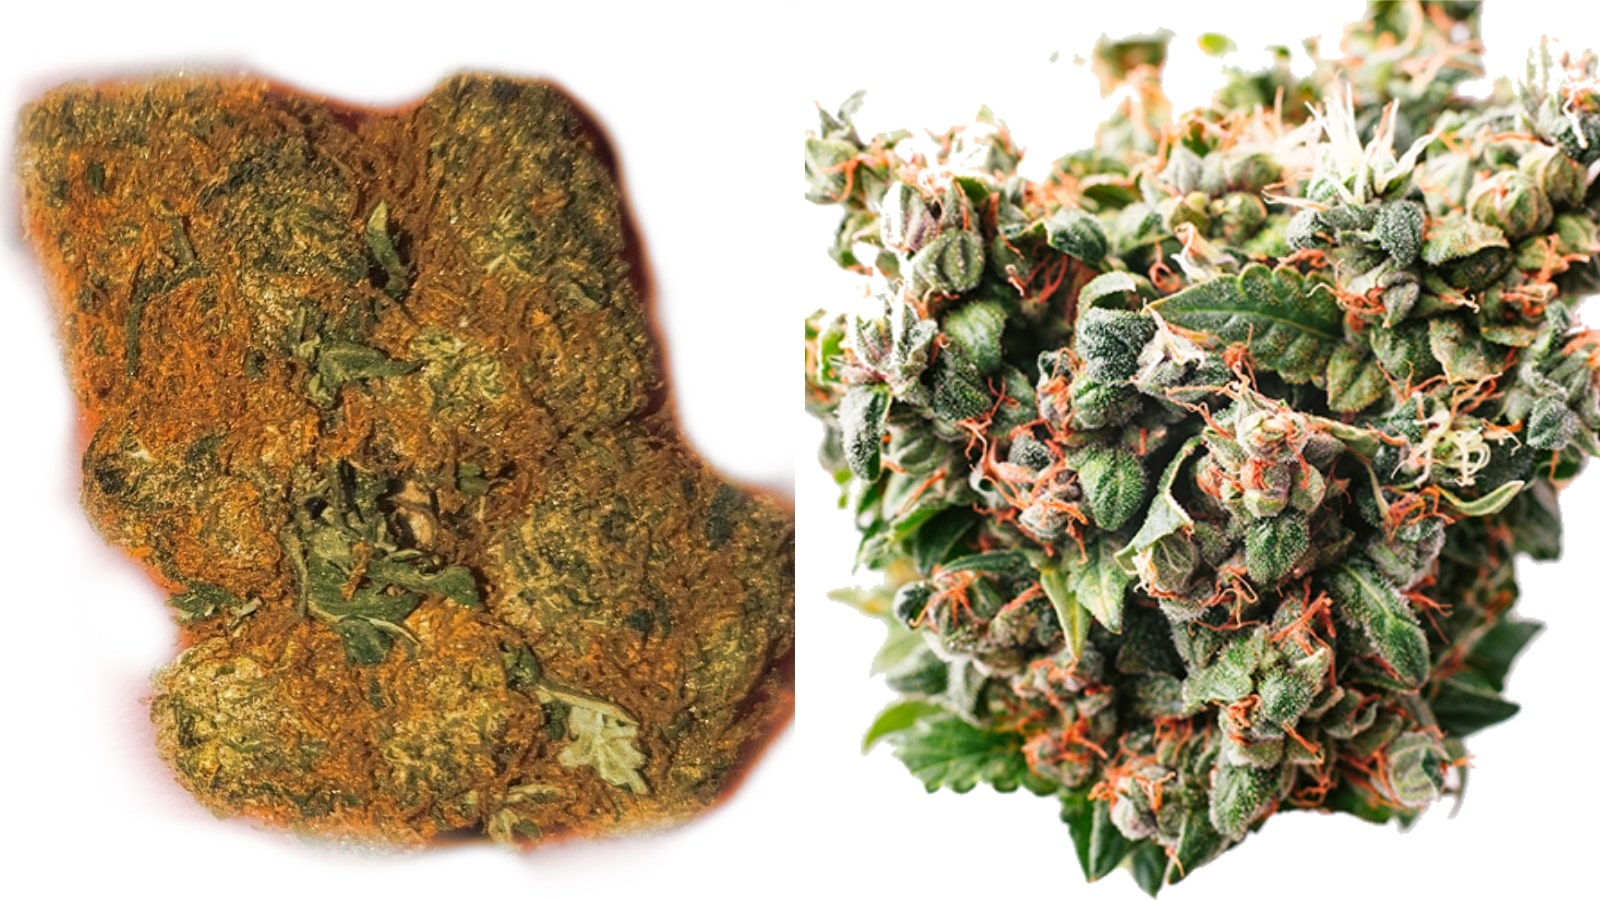 PGR Weed VS Natural Cannabis